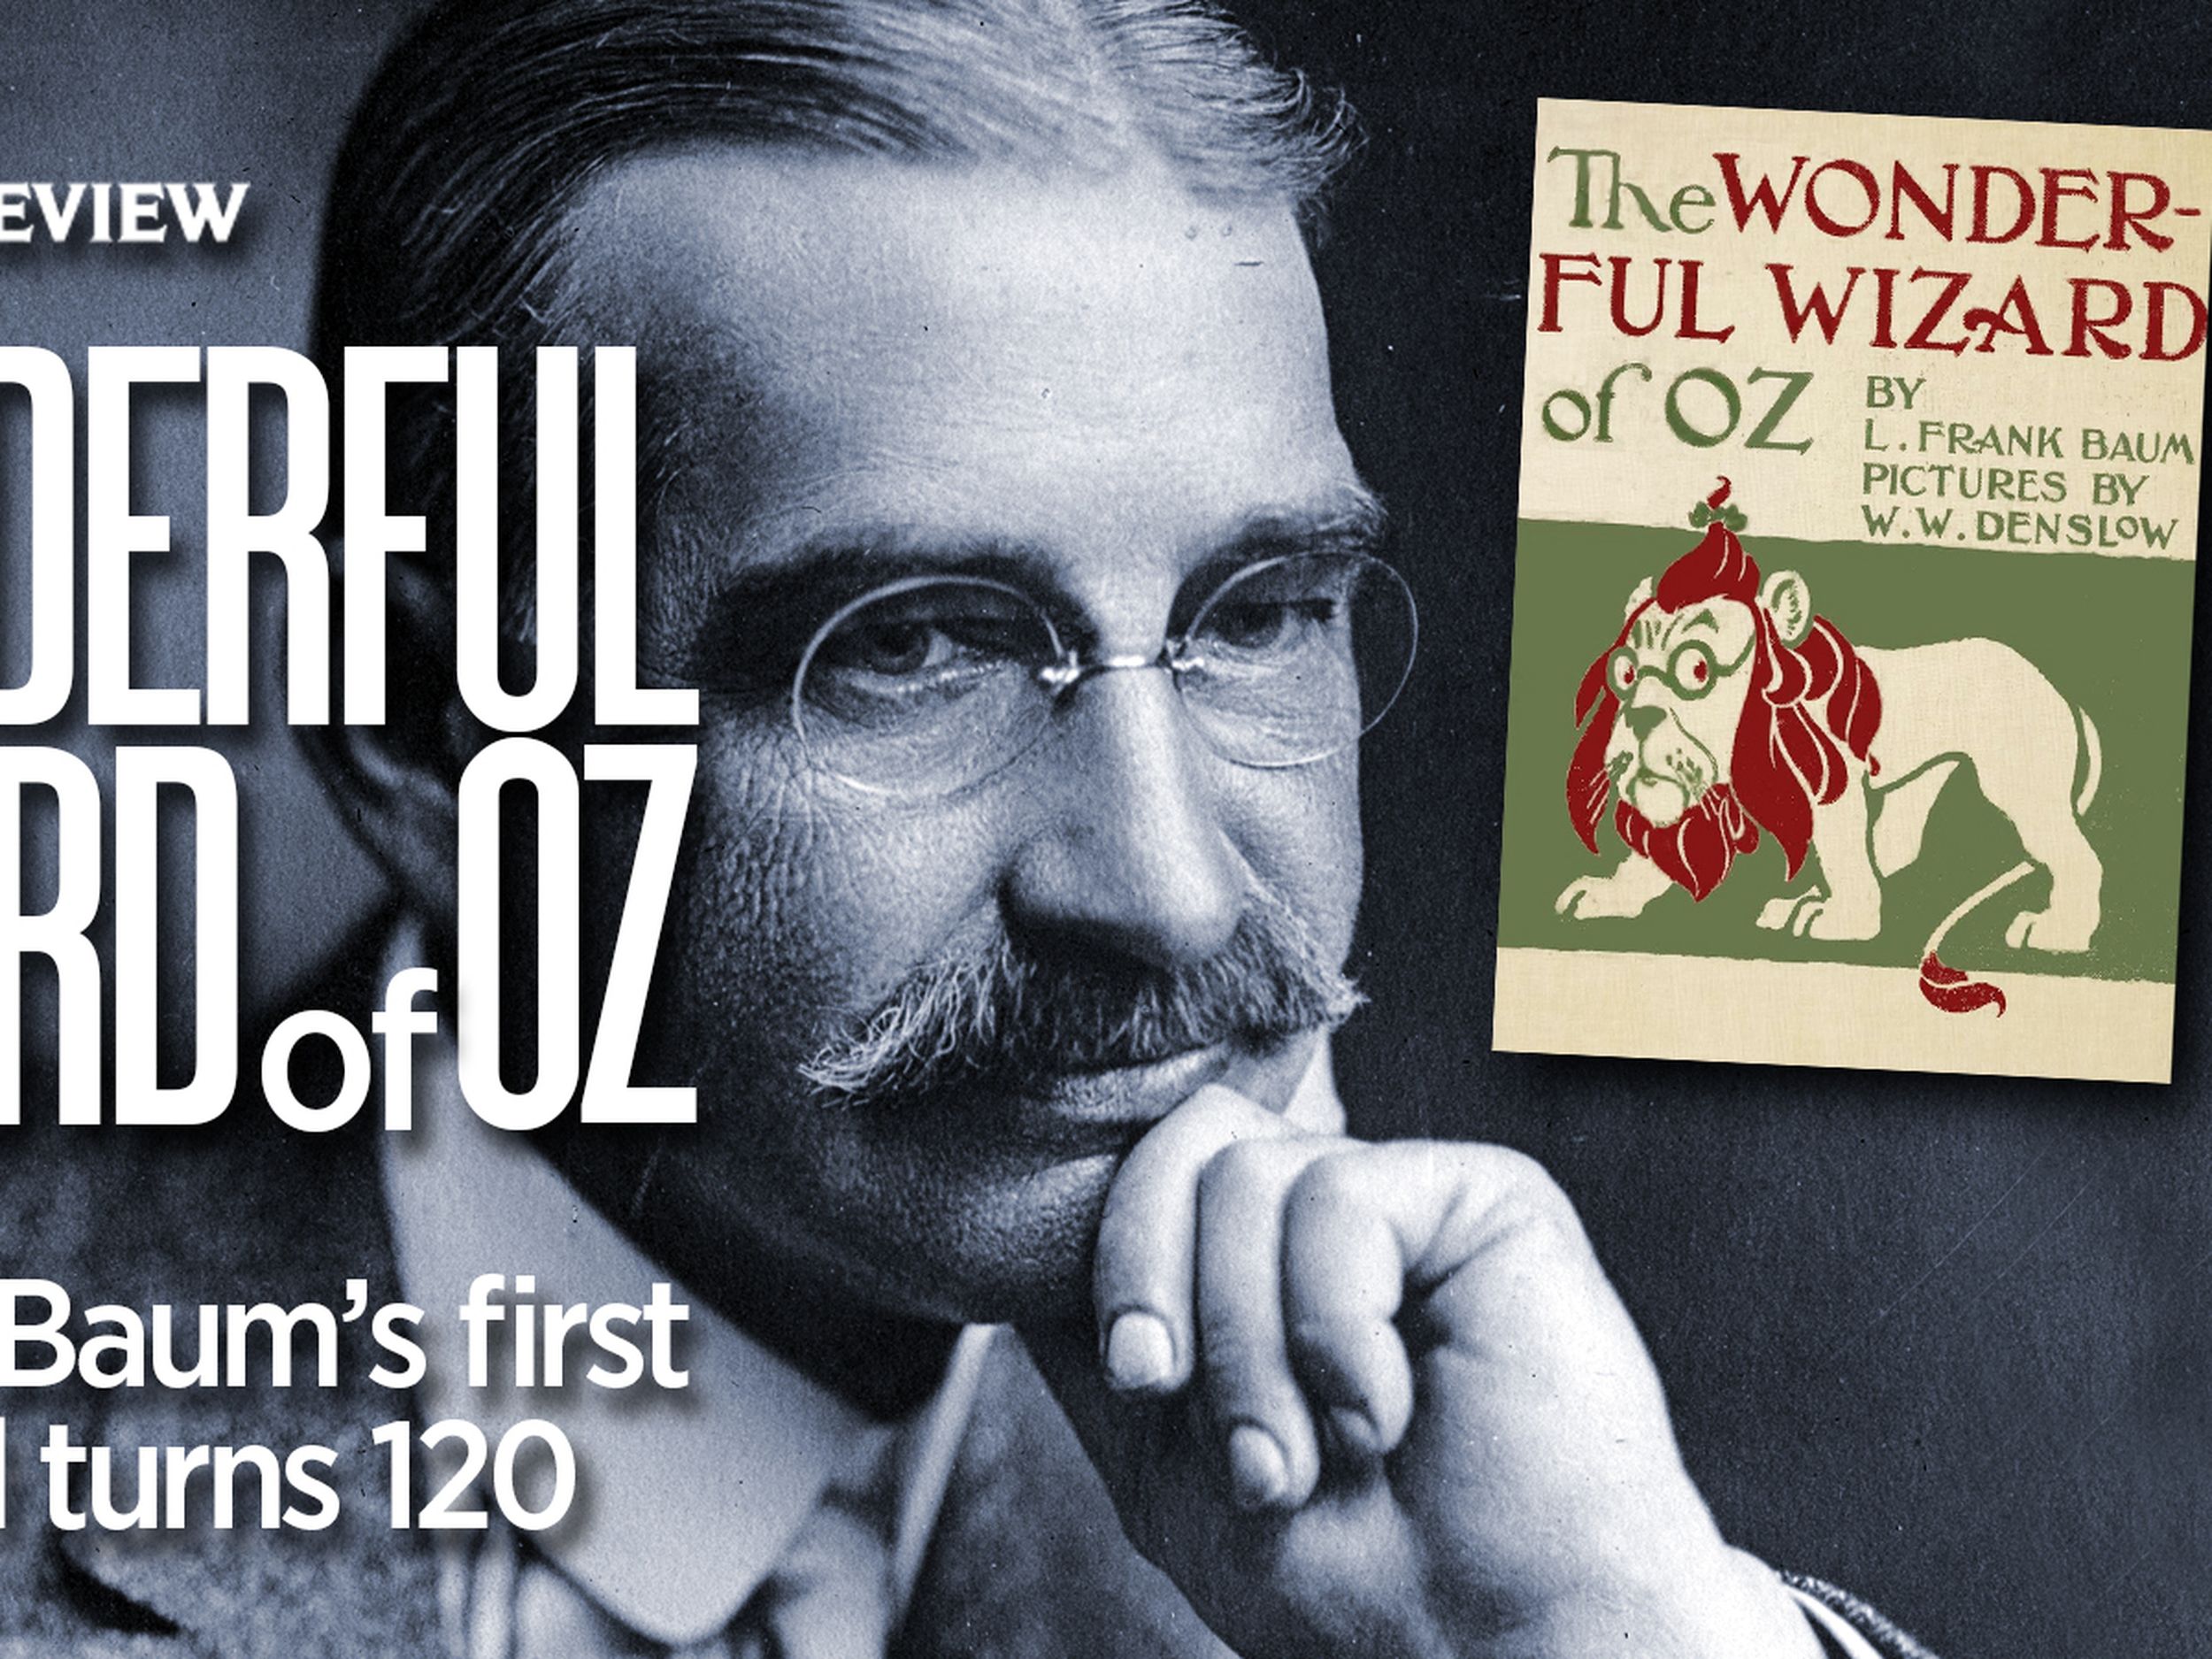 The Wonderful Wizard of Oz' turns 120